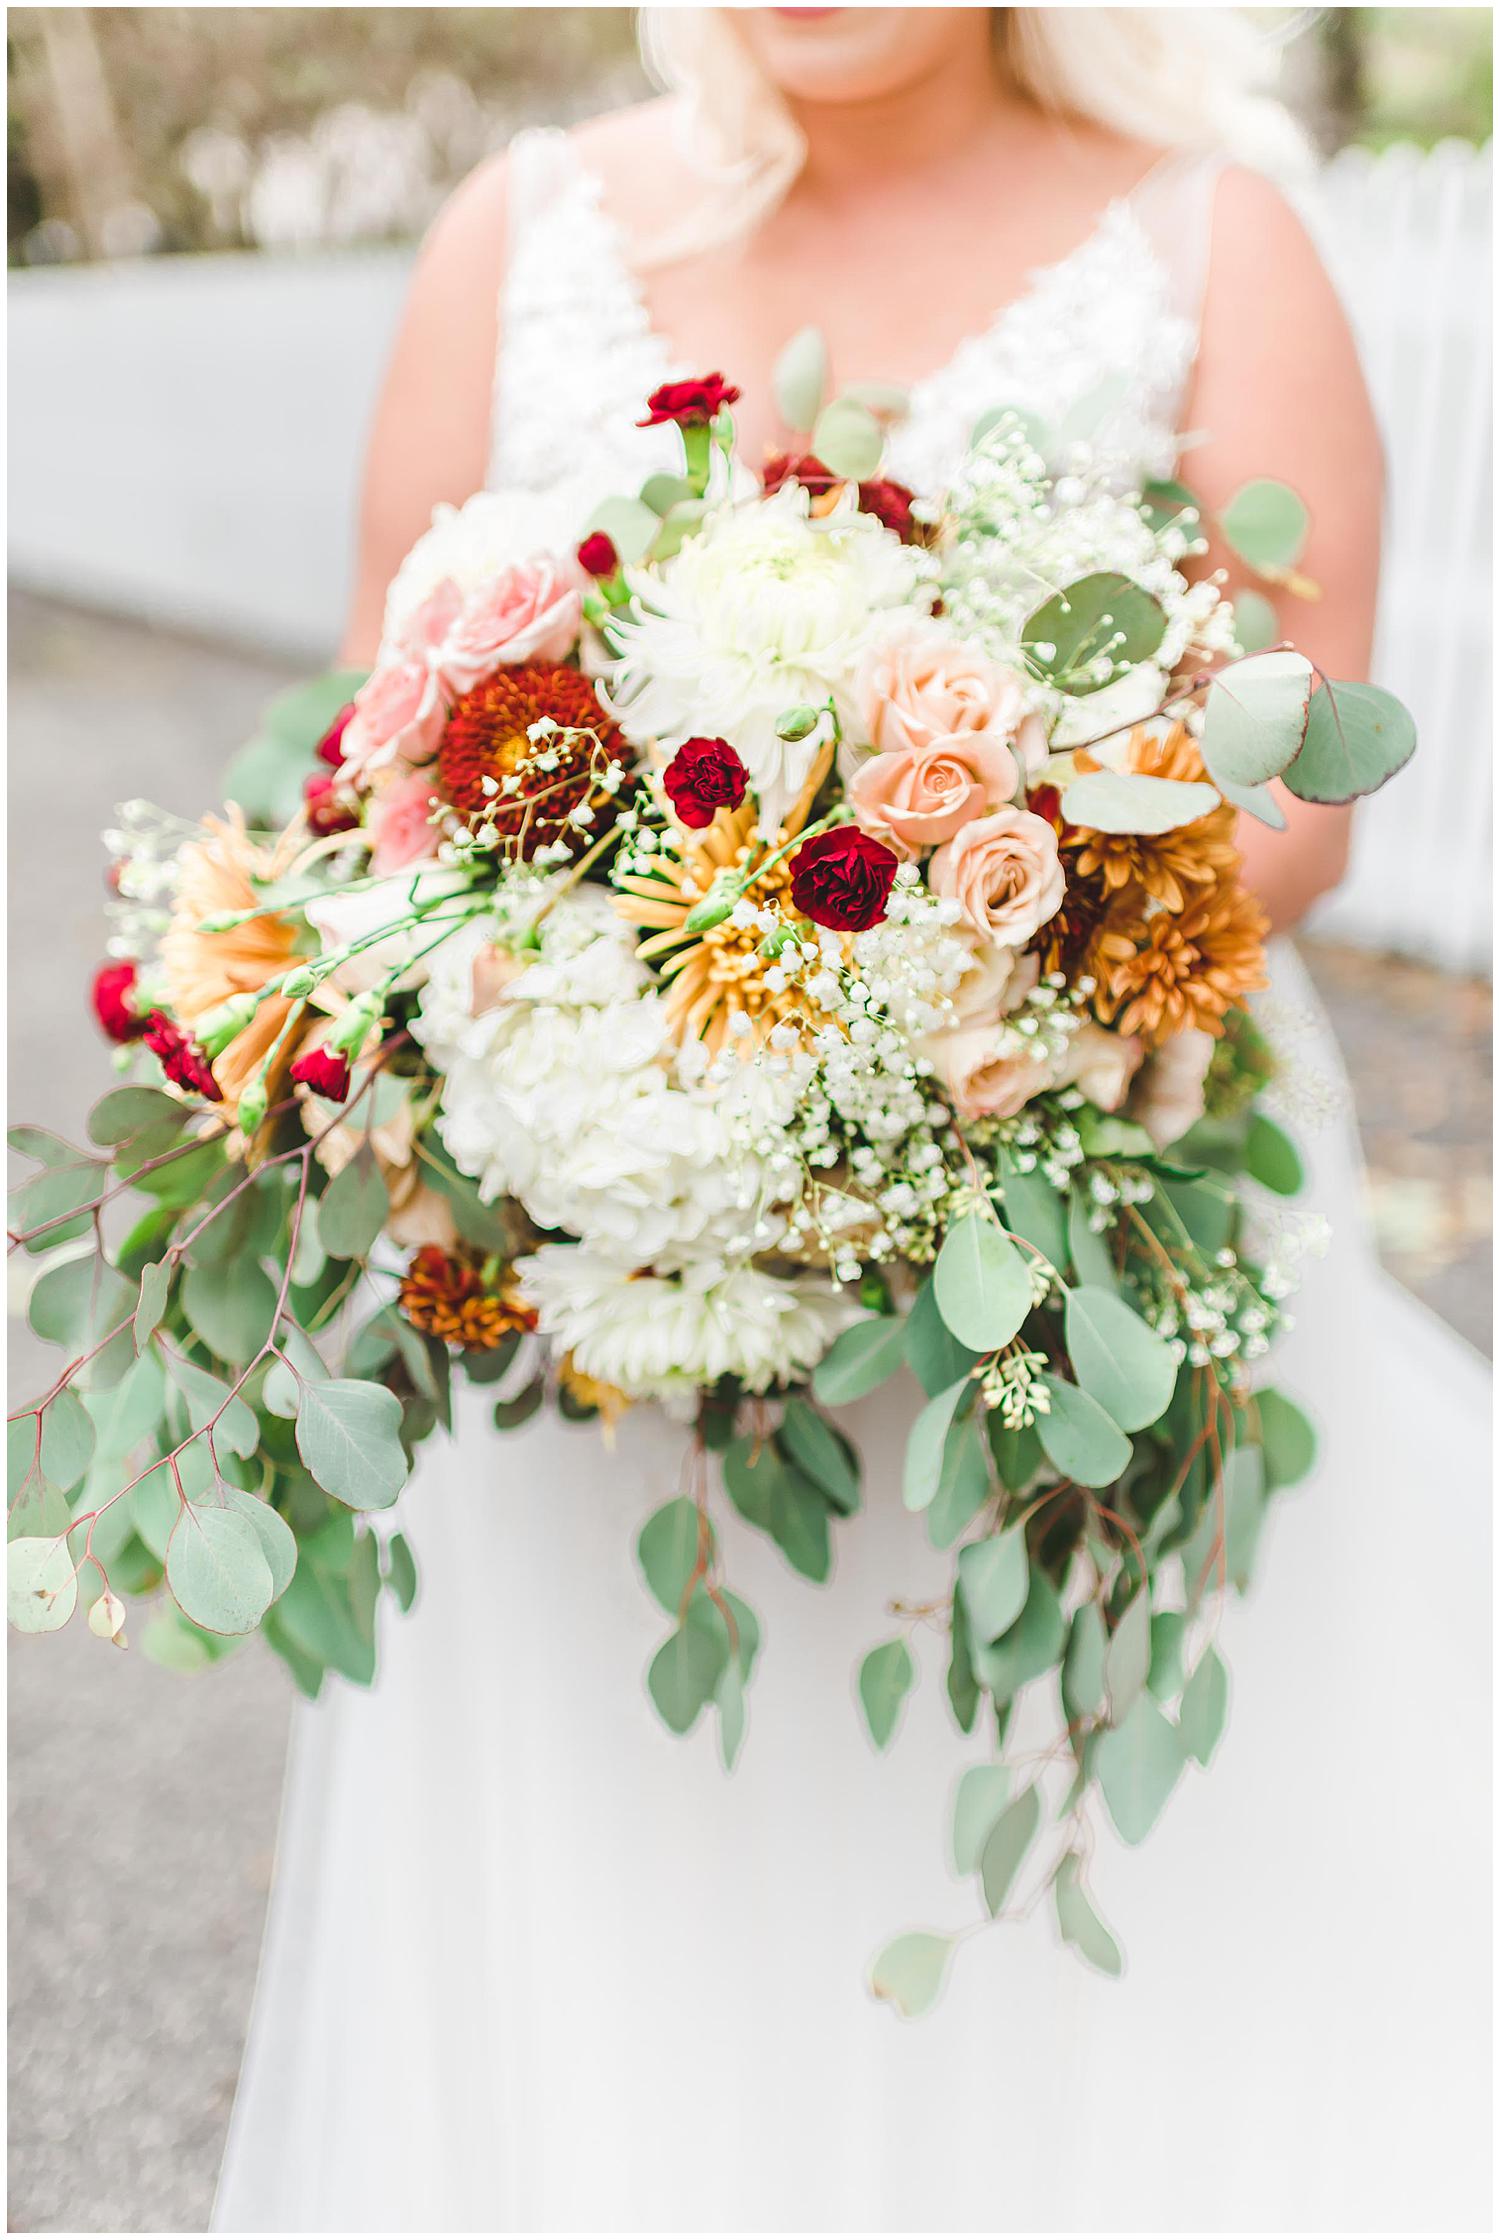 charlotte wedding photographers create bridal bouquet image to cherish